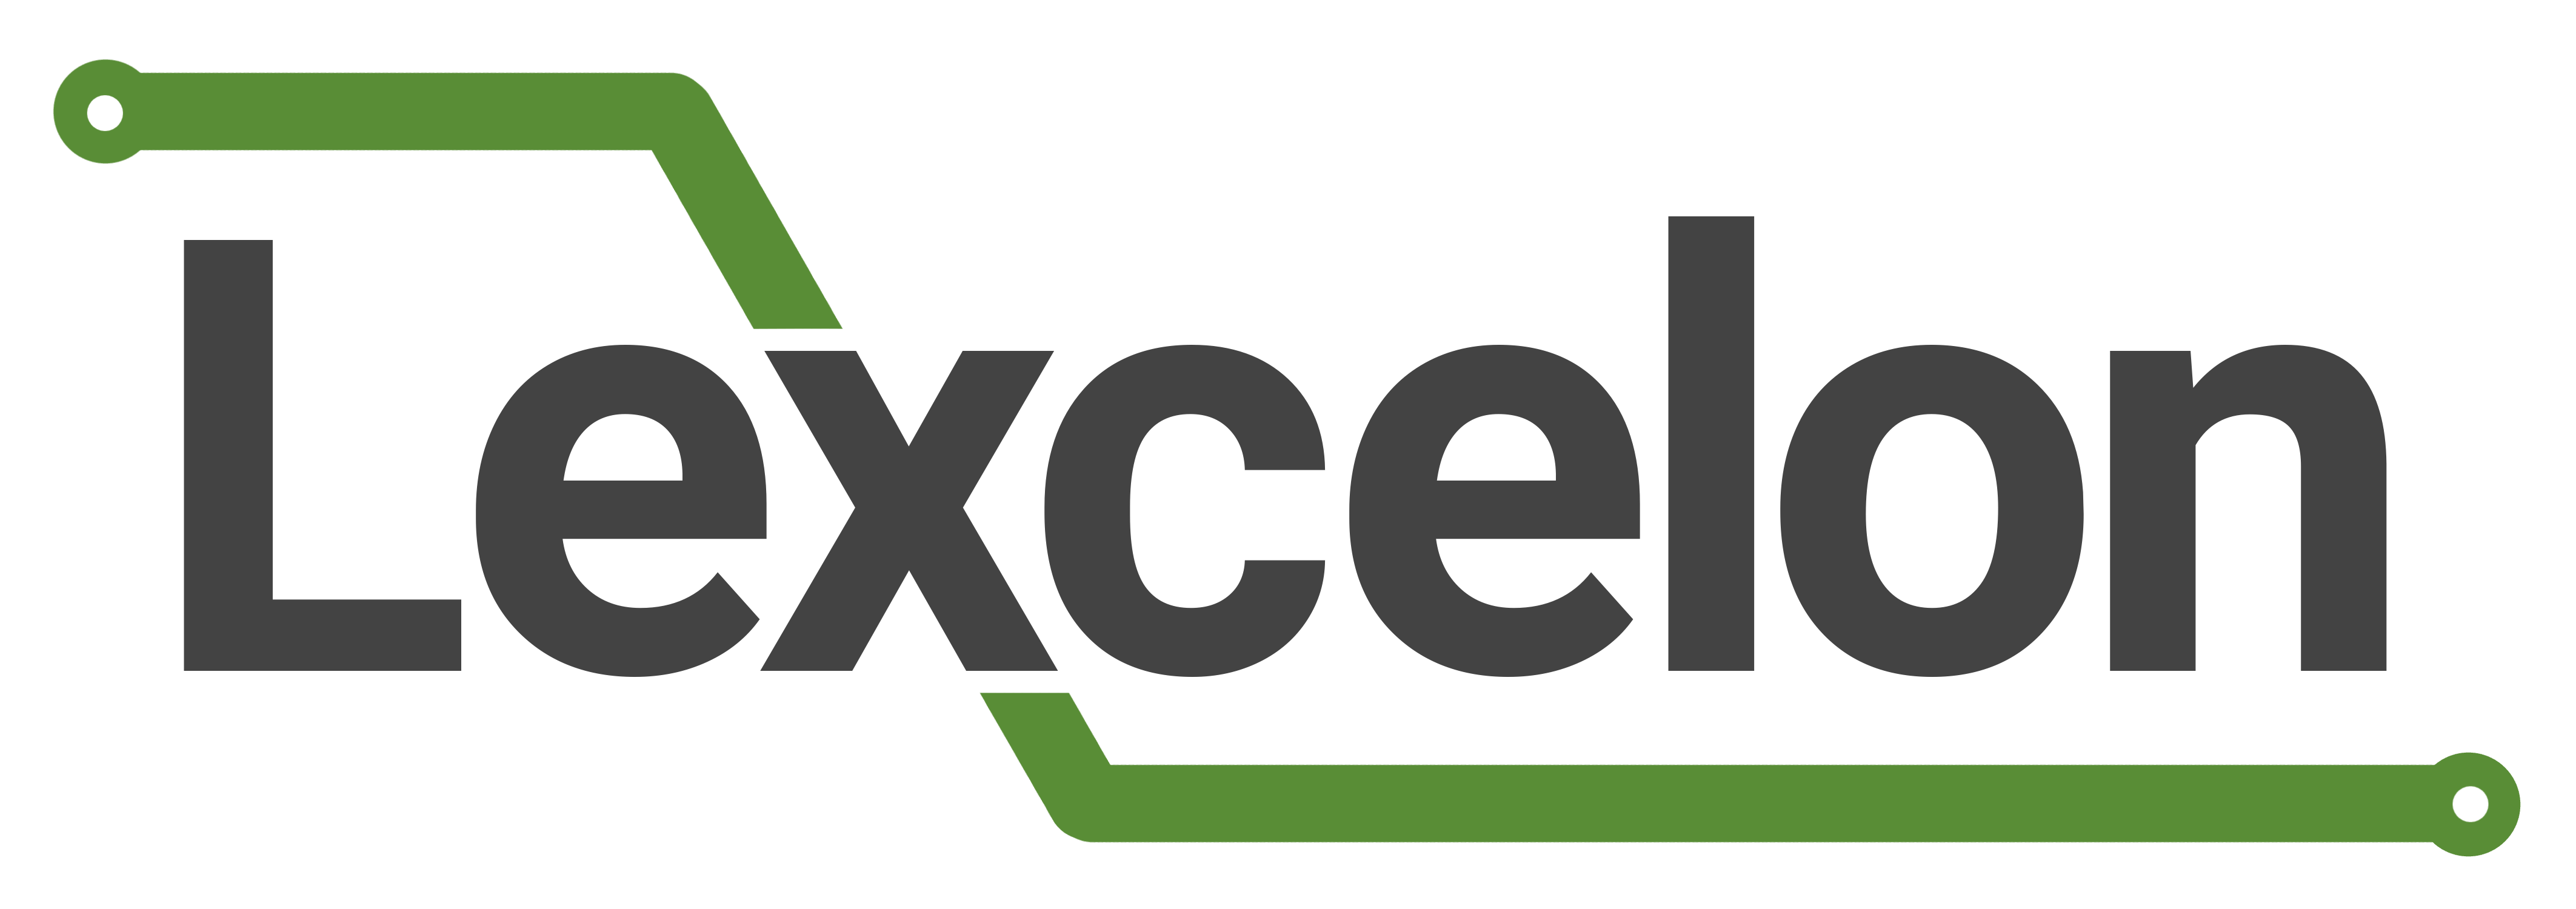 Lexcelon Logo